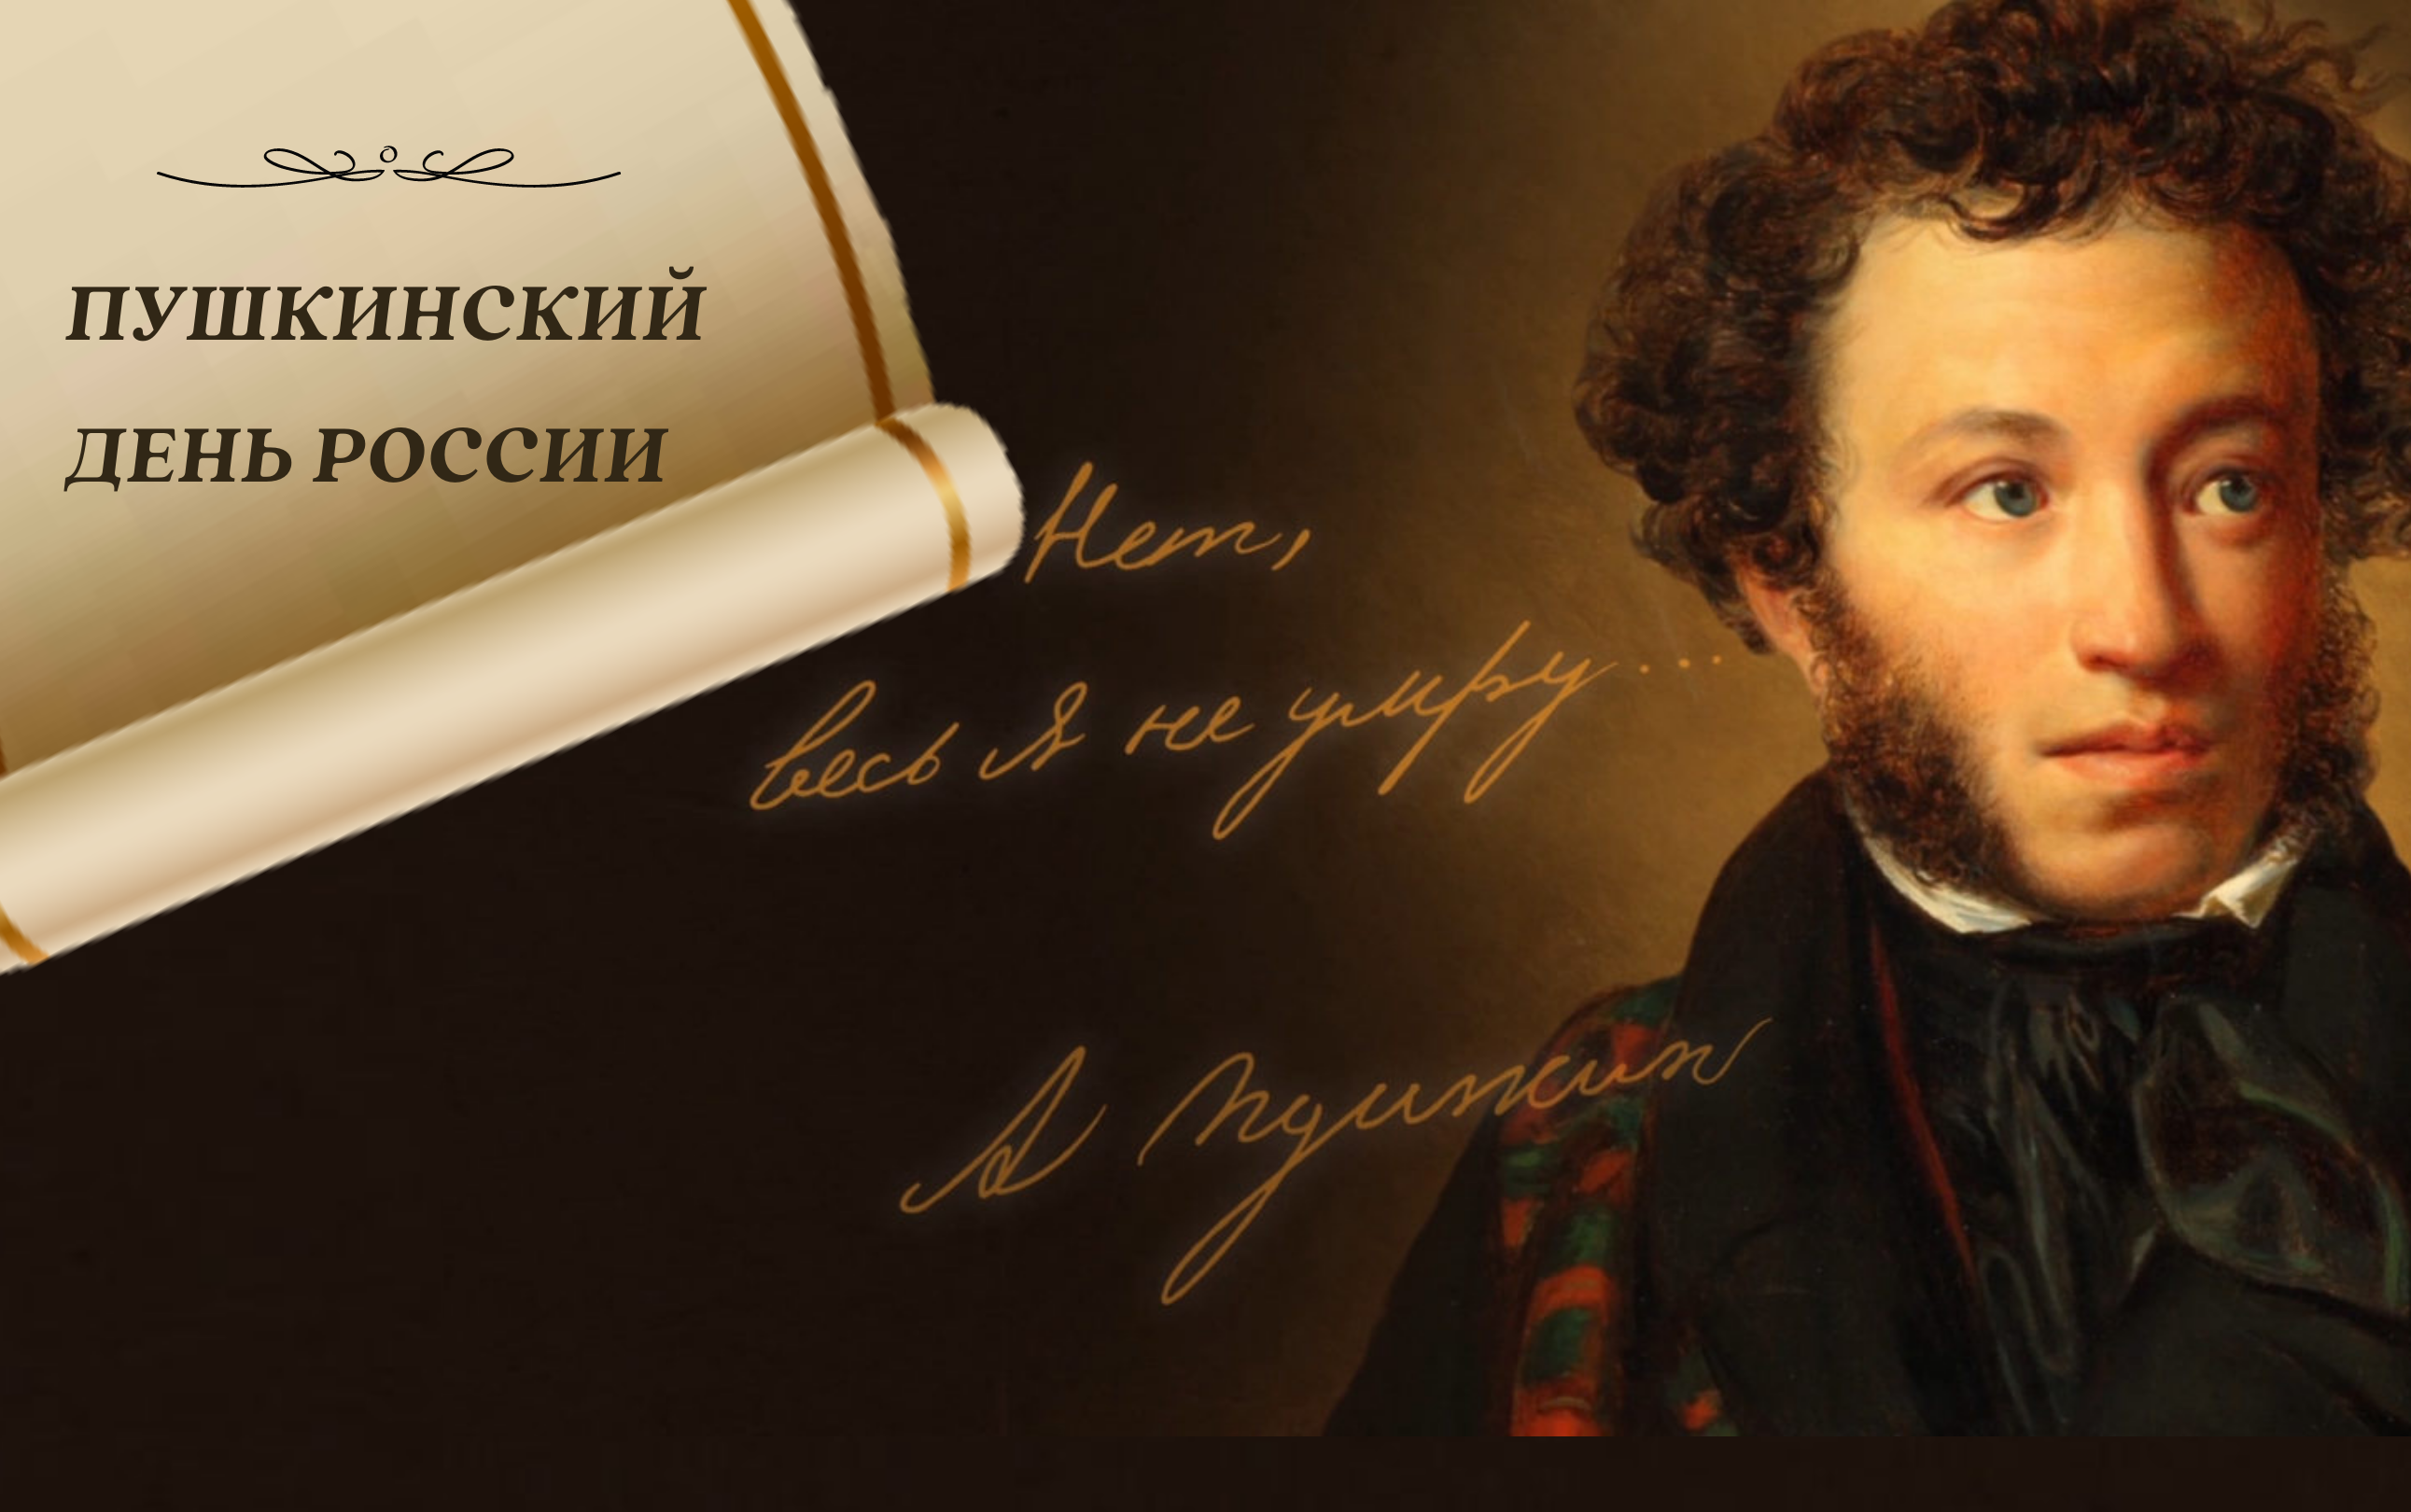 Дата пушкинского дня. Пушкин 6 июня.